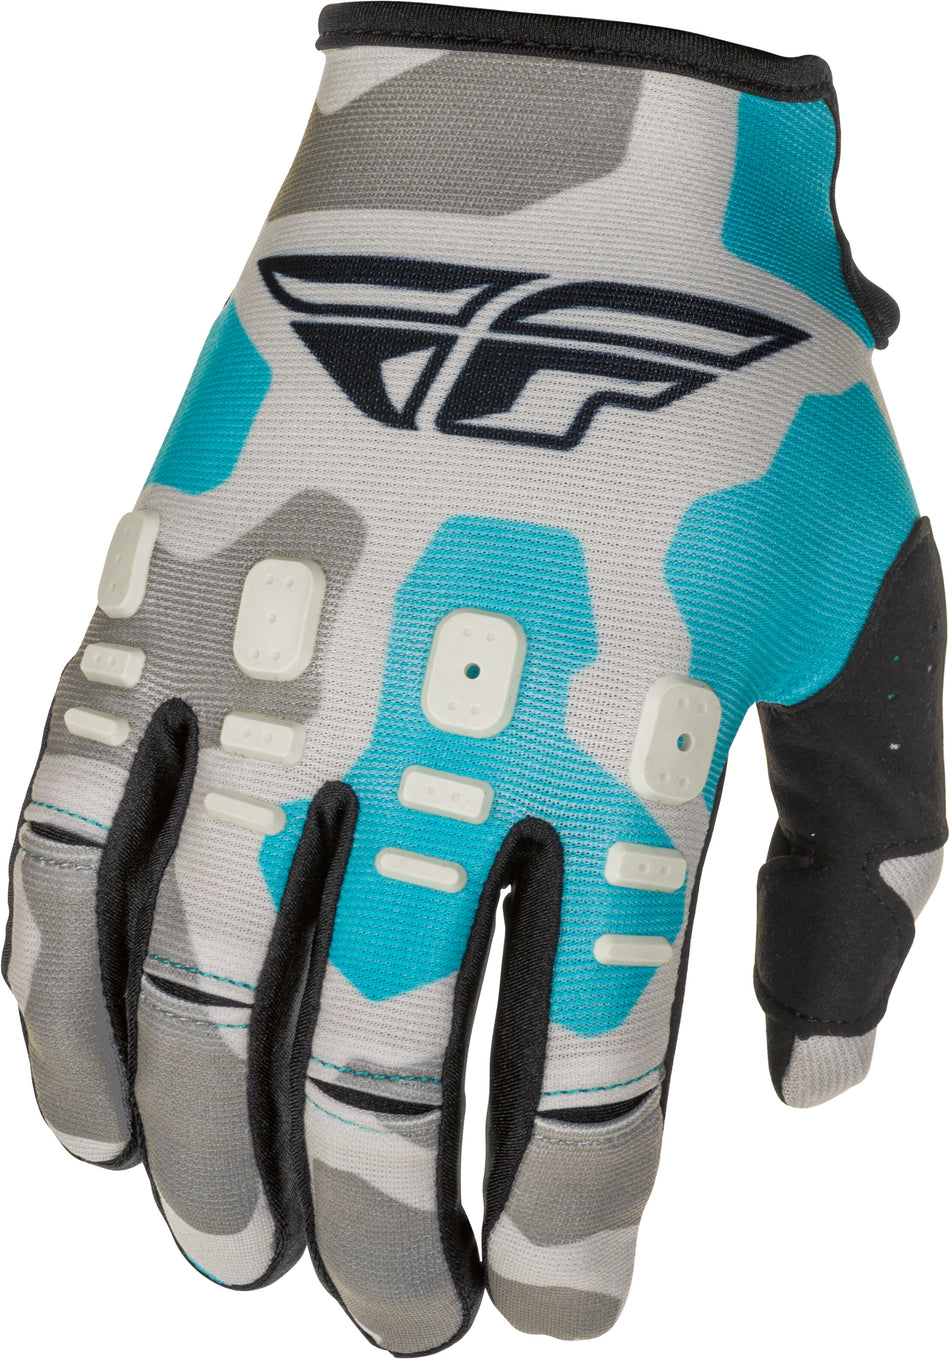 FLY RACING Kinetic K221 Gloves Grey/Blue Sz 08 374-51608